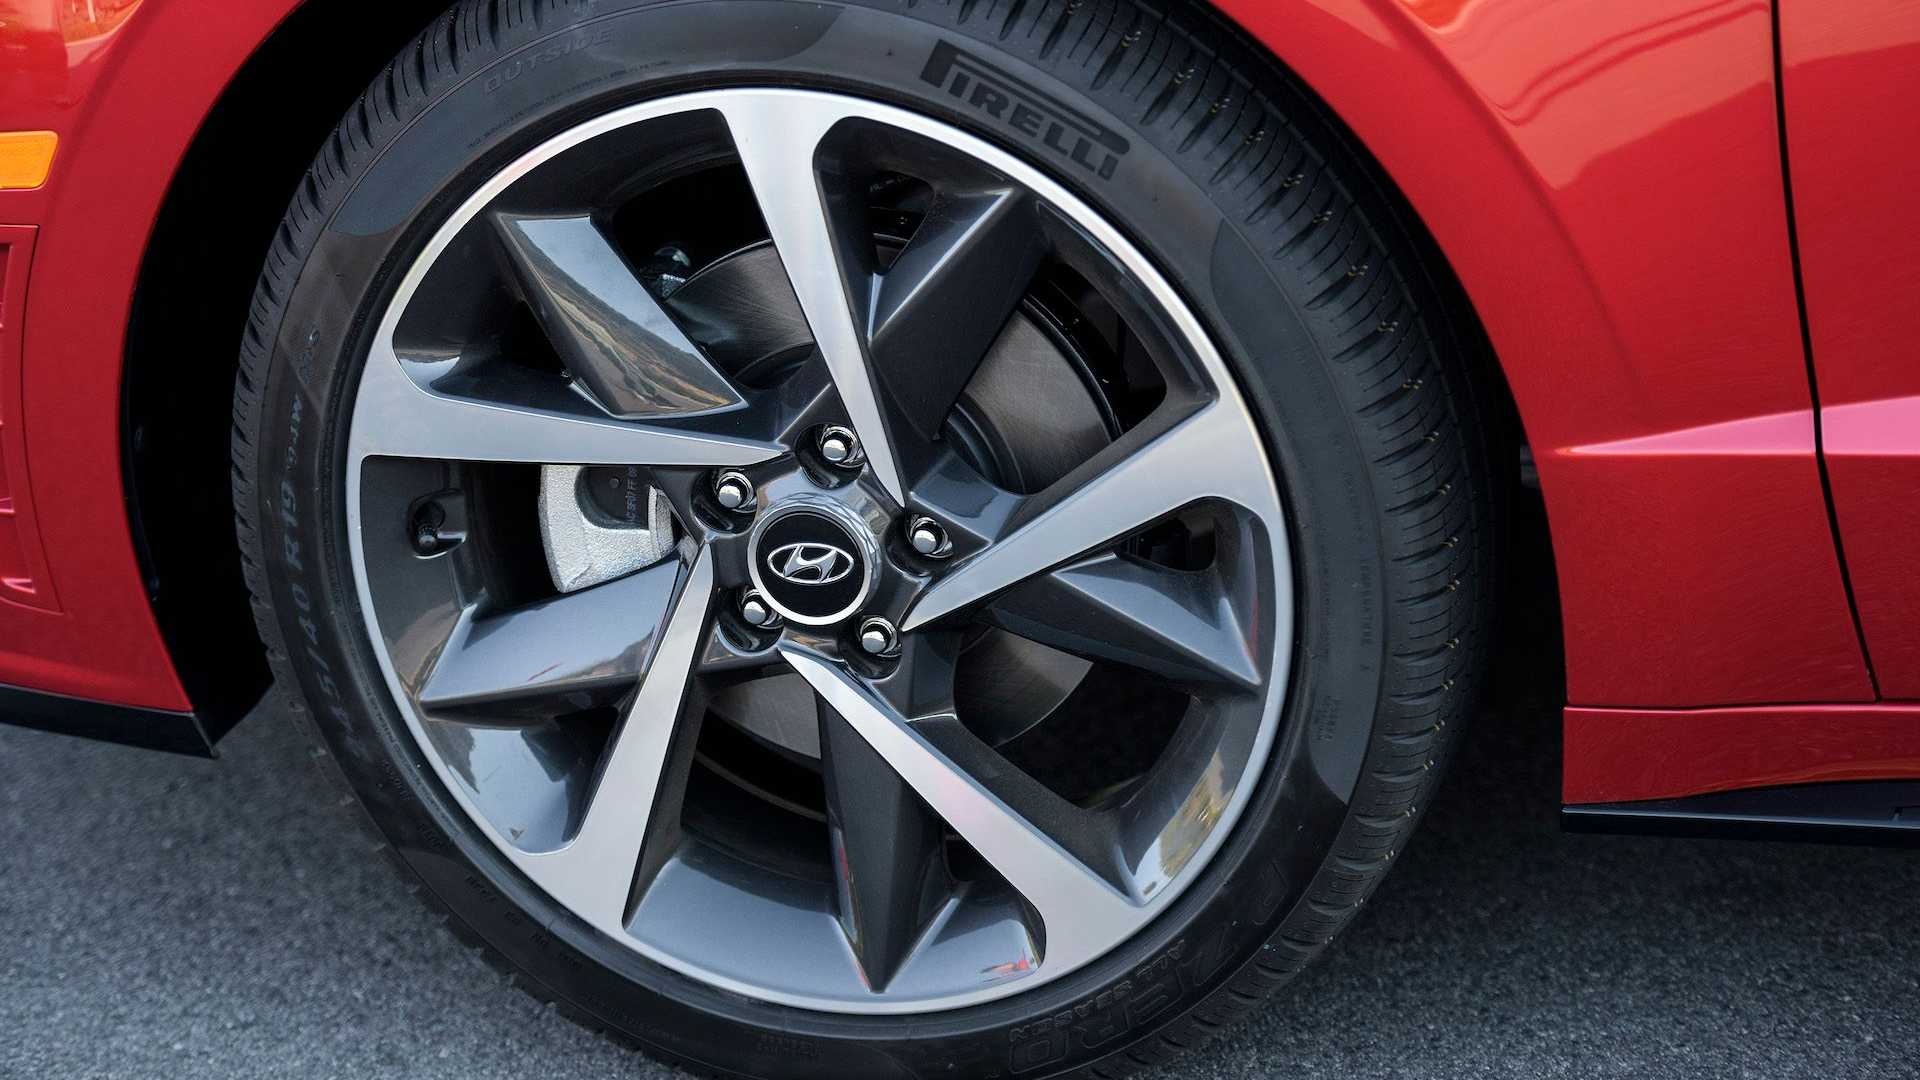 2021-hyundai-sonata-19-inch-wheels-with-pirelli-tires.jpg